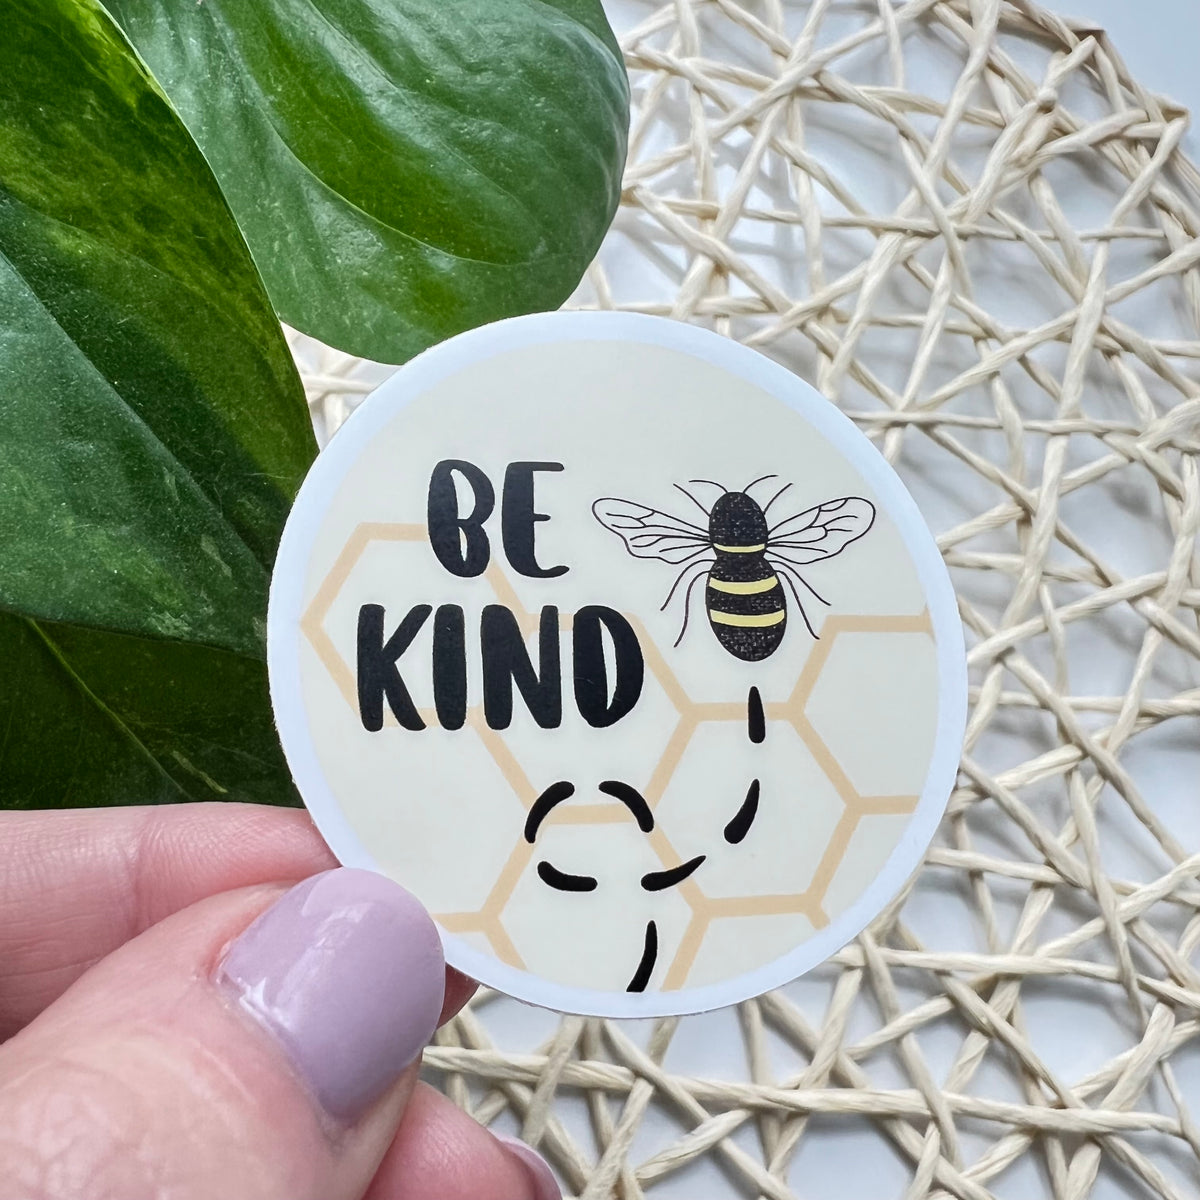 Choose Kindness Multicolor Lettering Sticker – Less Bitter More Glitter